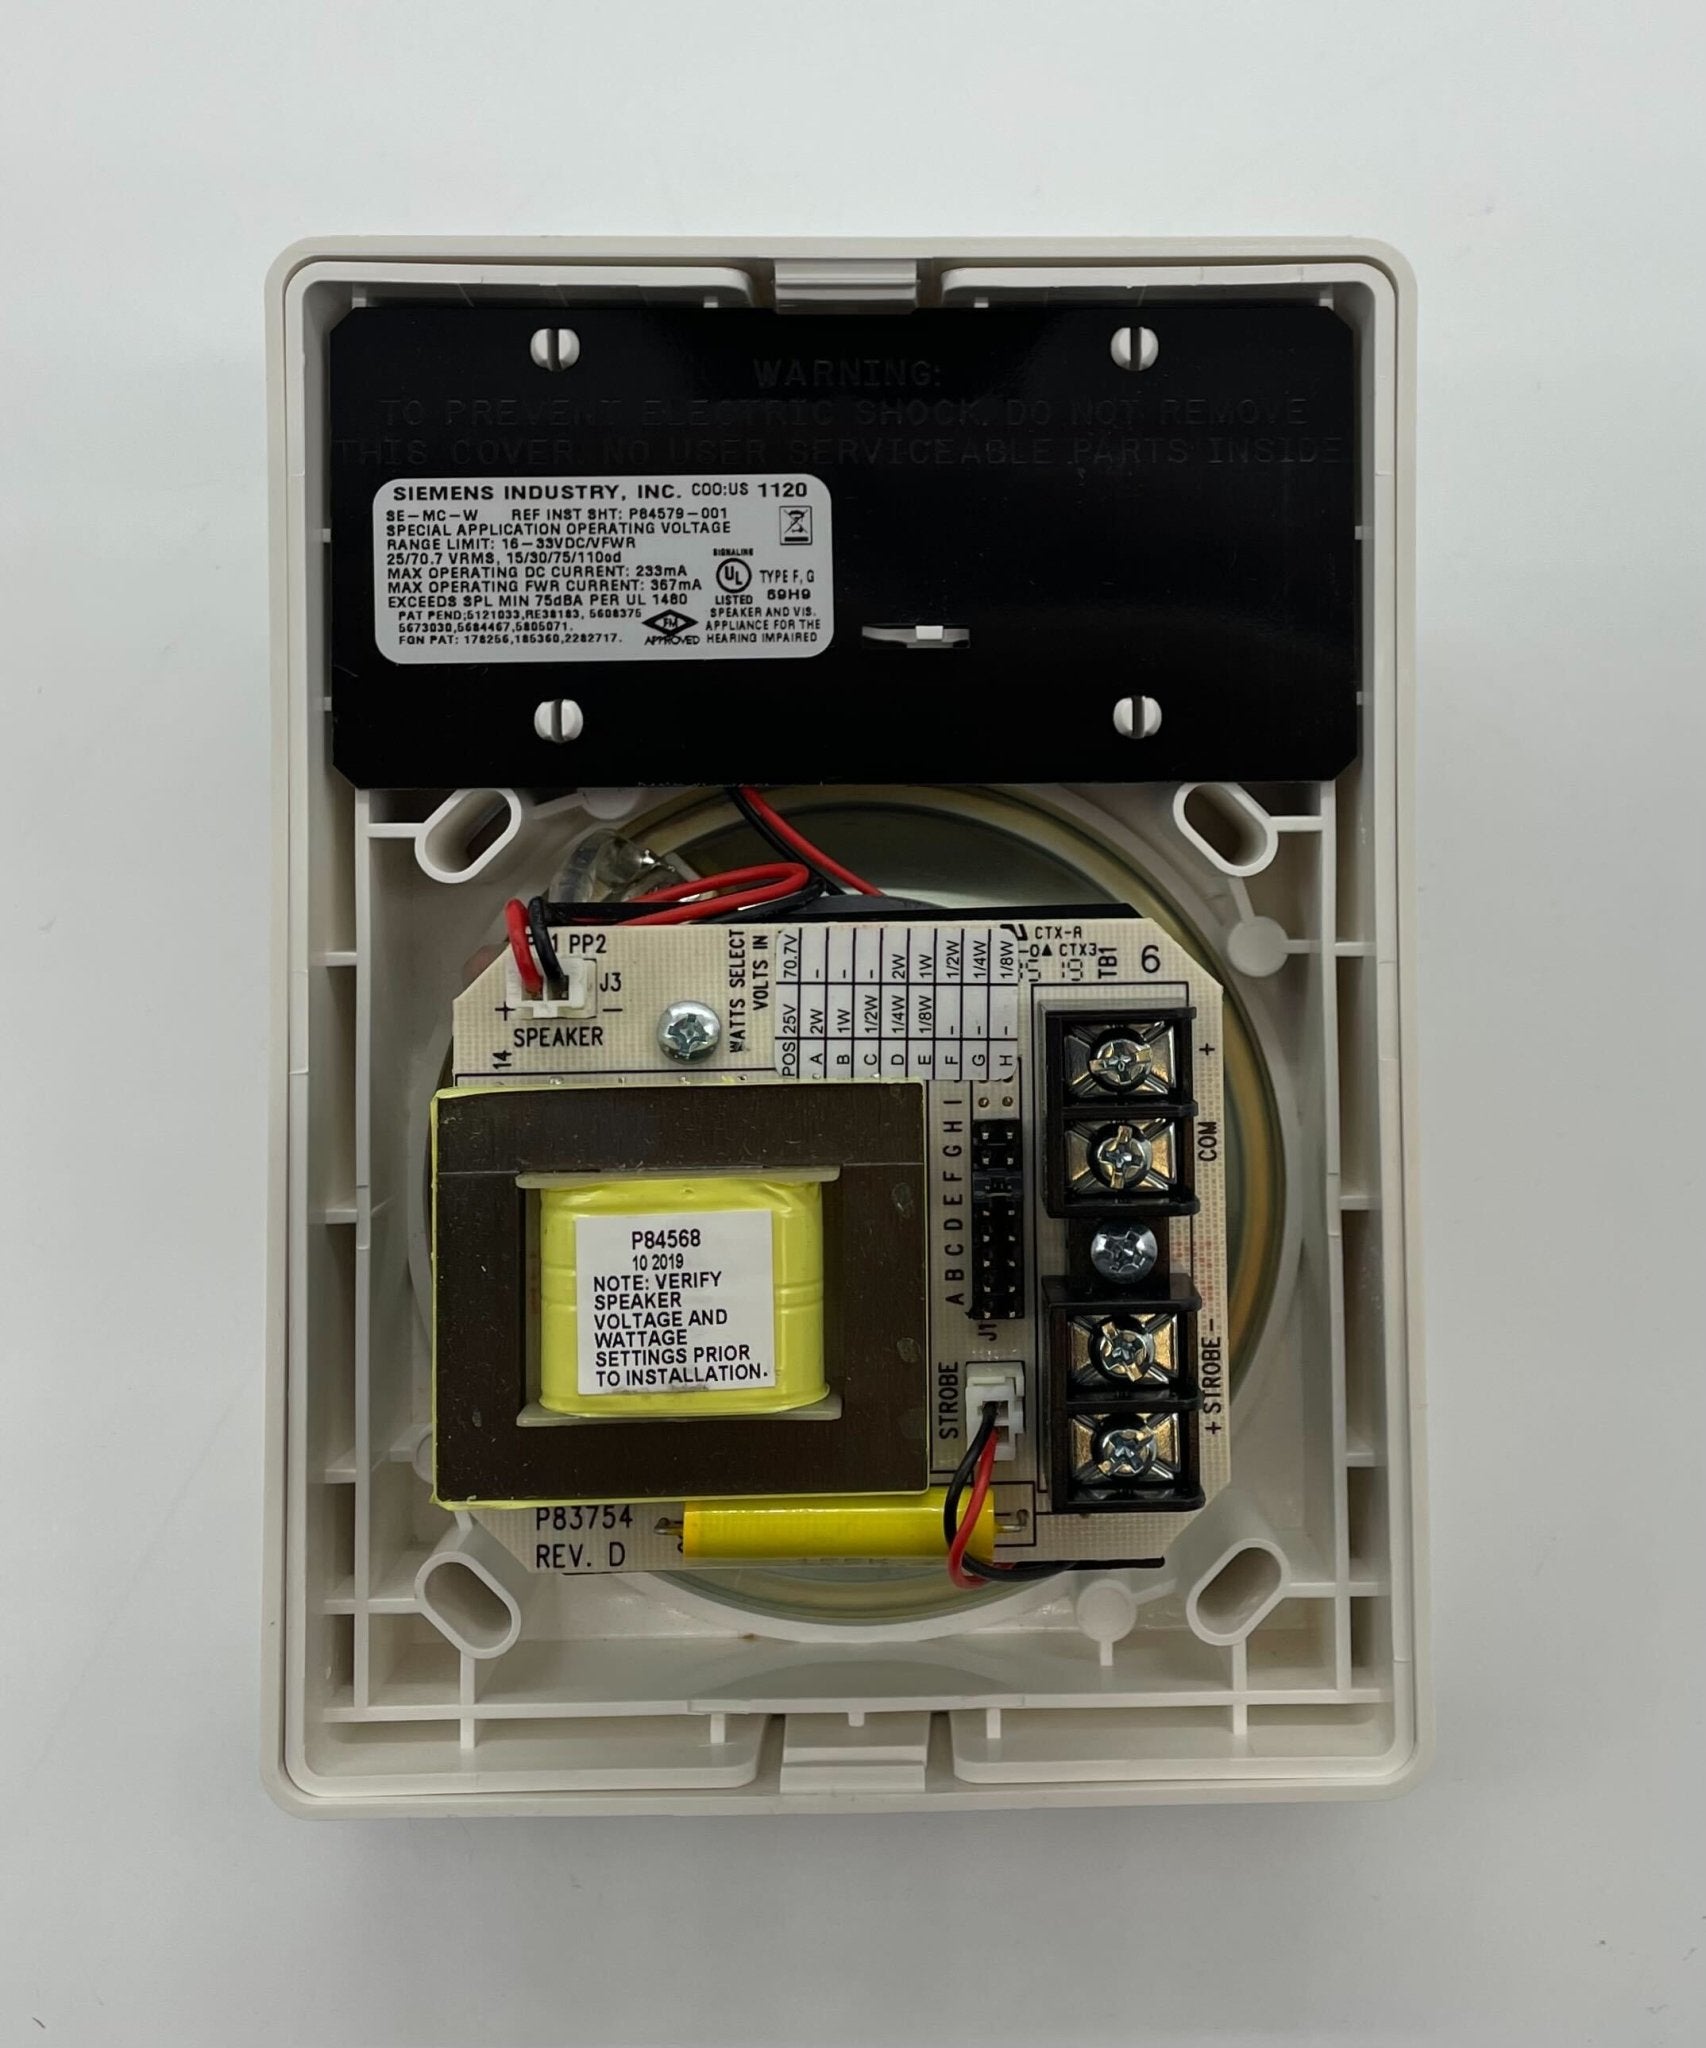 Siemens SE-MC-W Multi-Candela Speaker Strobe - The Fire Alarm Supplier